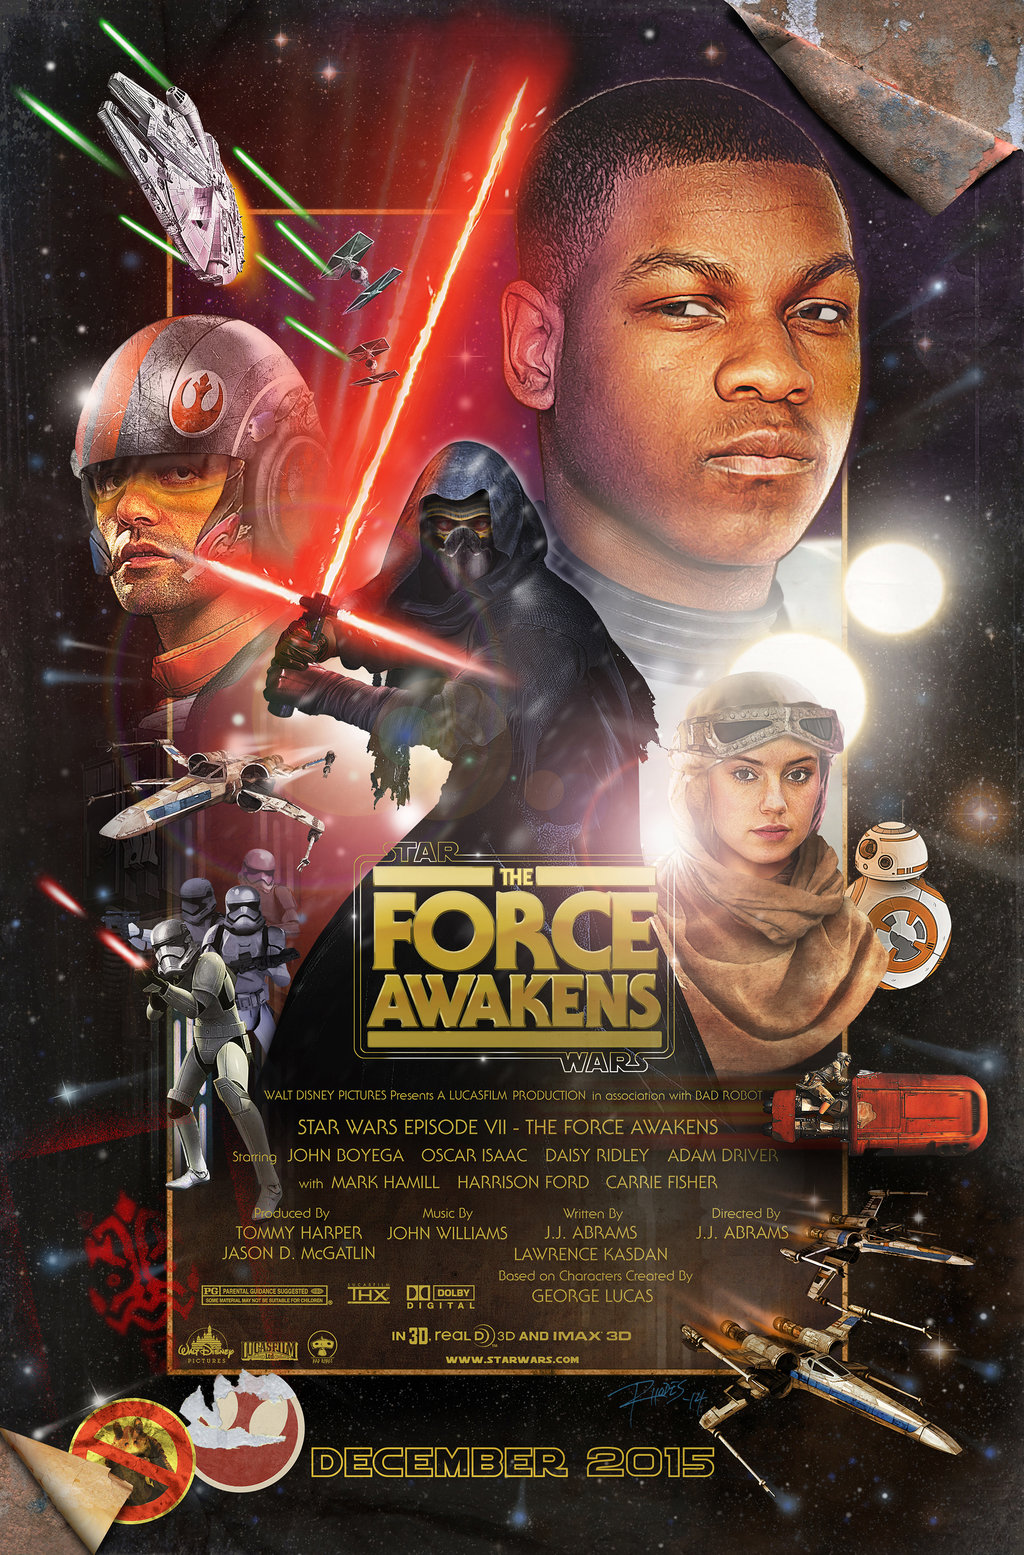 the_force_awakens_poster__version_a__small_by_love_carmichael-d8bon1k.jpg